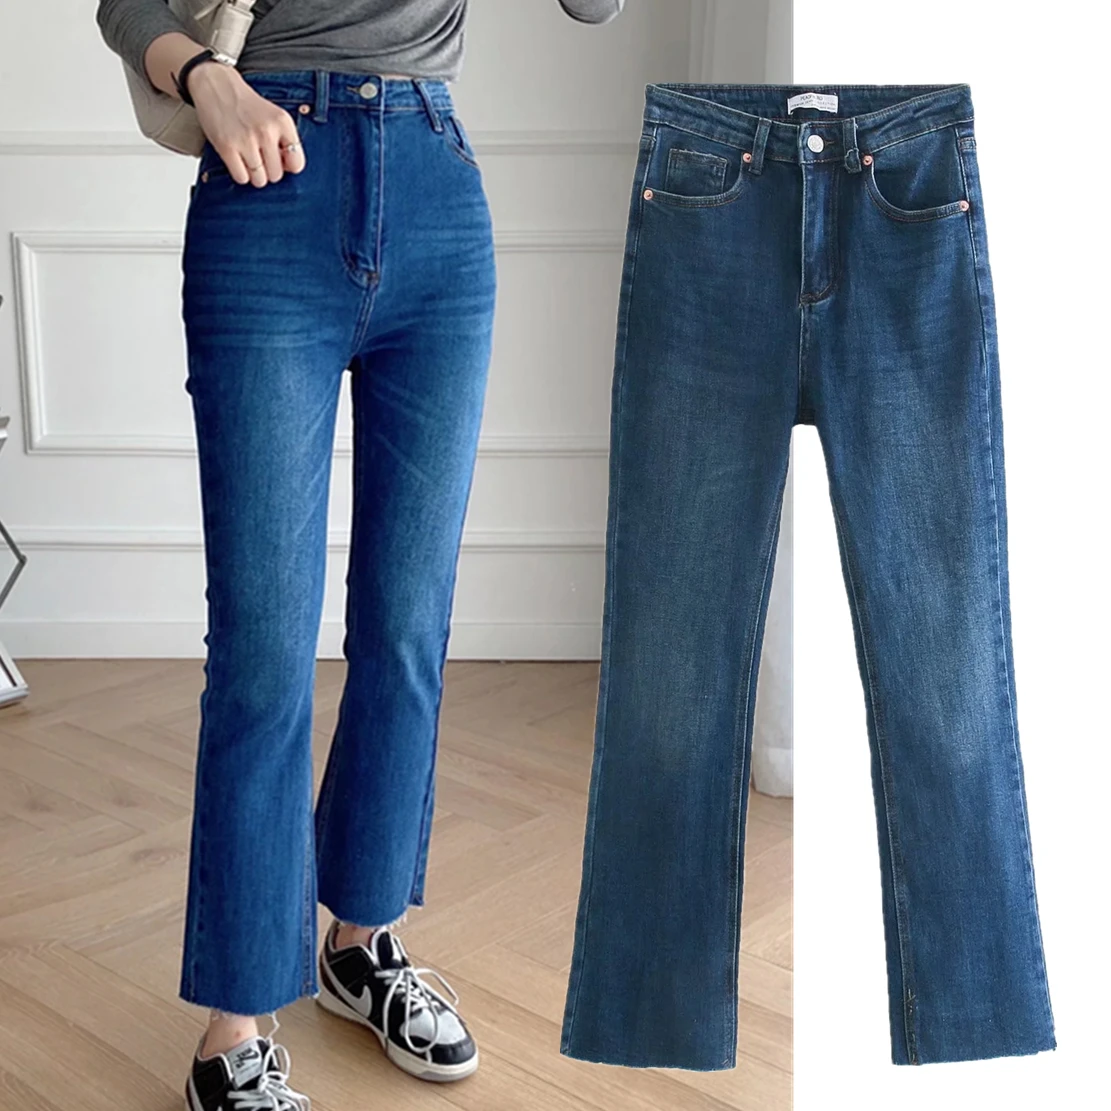 

Elmsk Fashion Skinny Jeans Dark Blue Flare Denim Pants England Style High Street Washed Casual Ankle Jeans Women